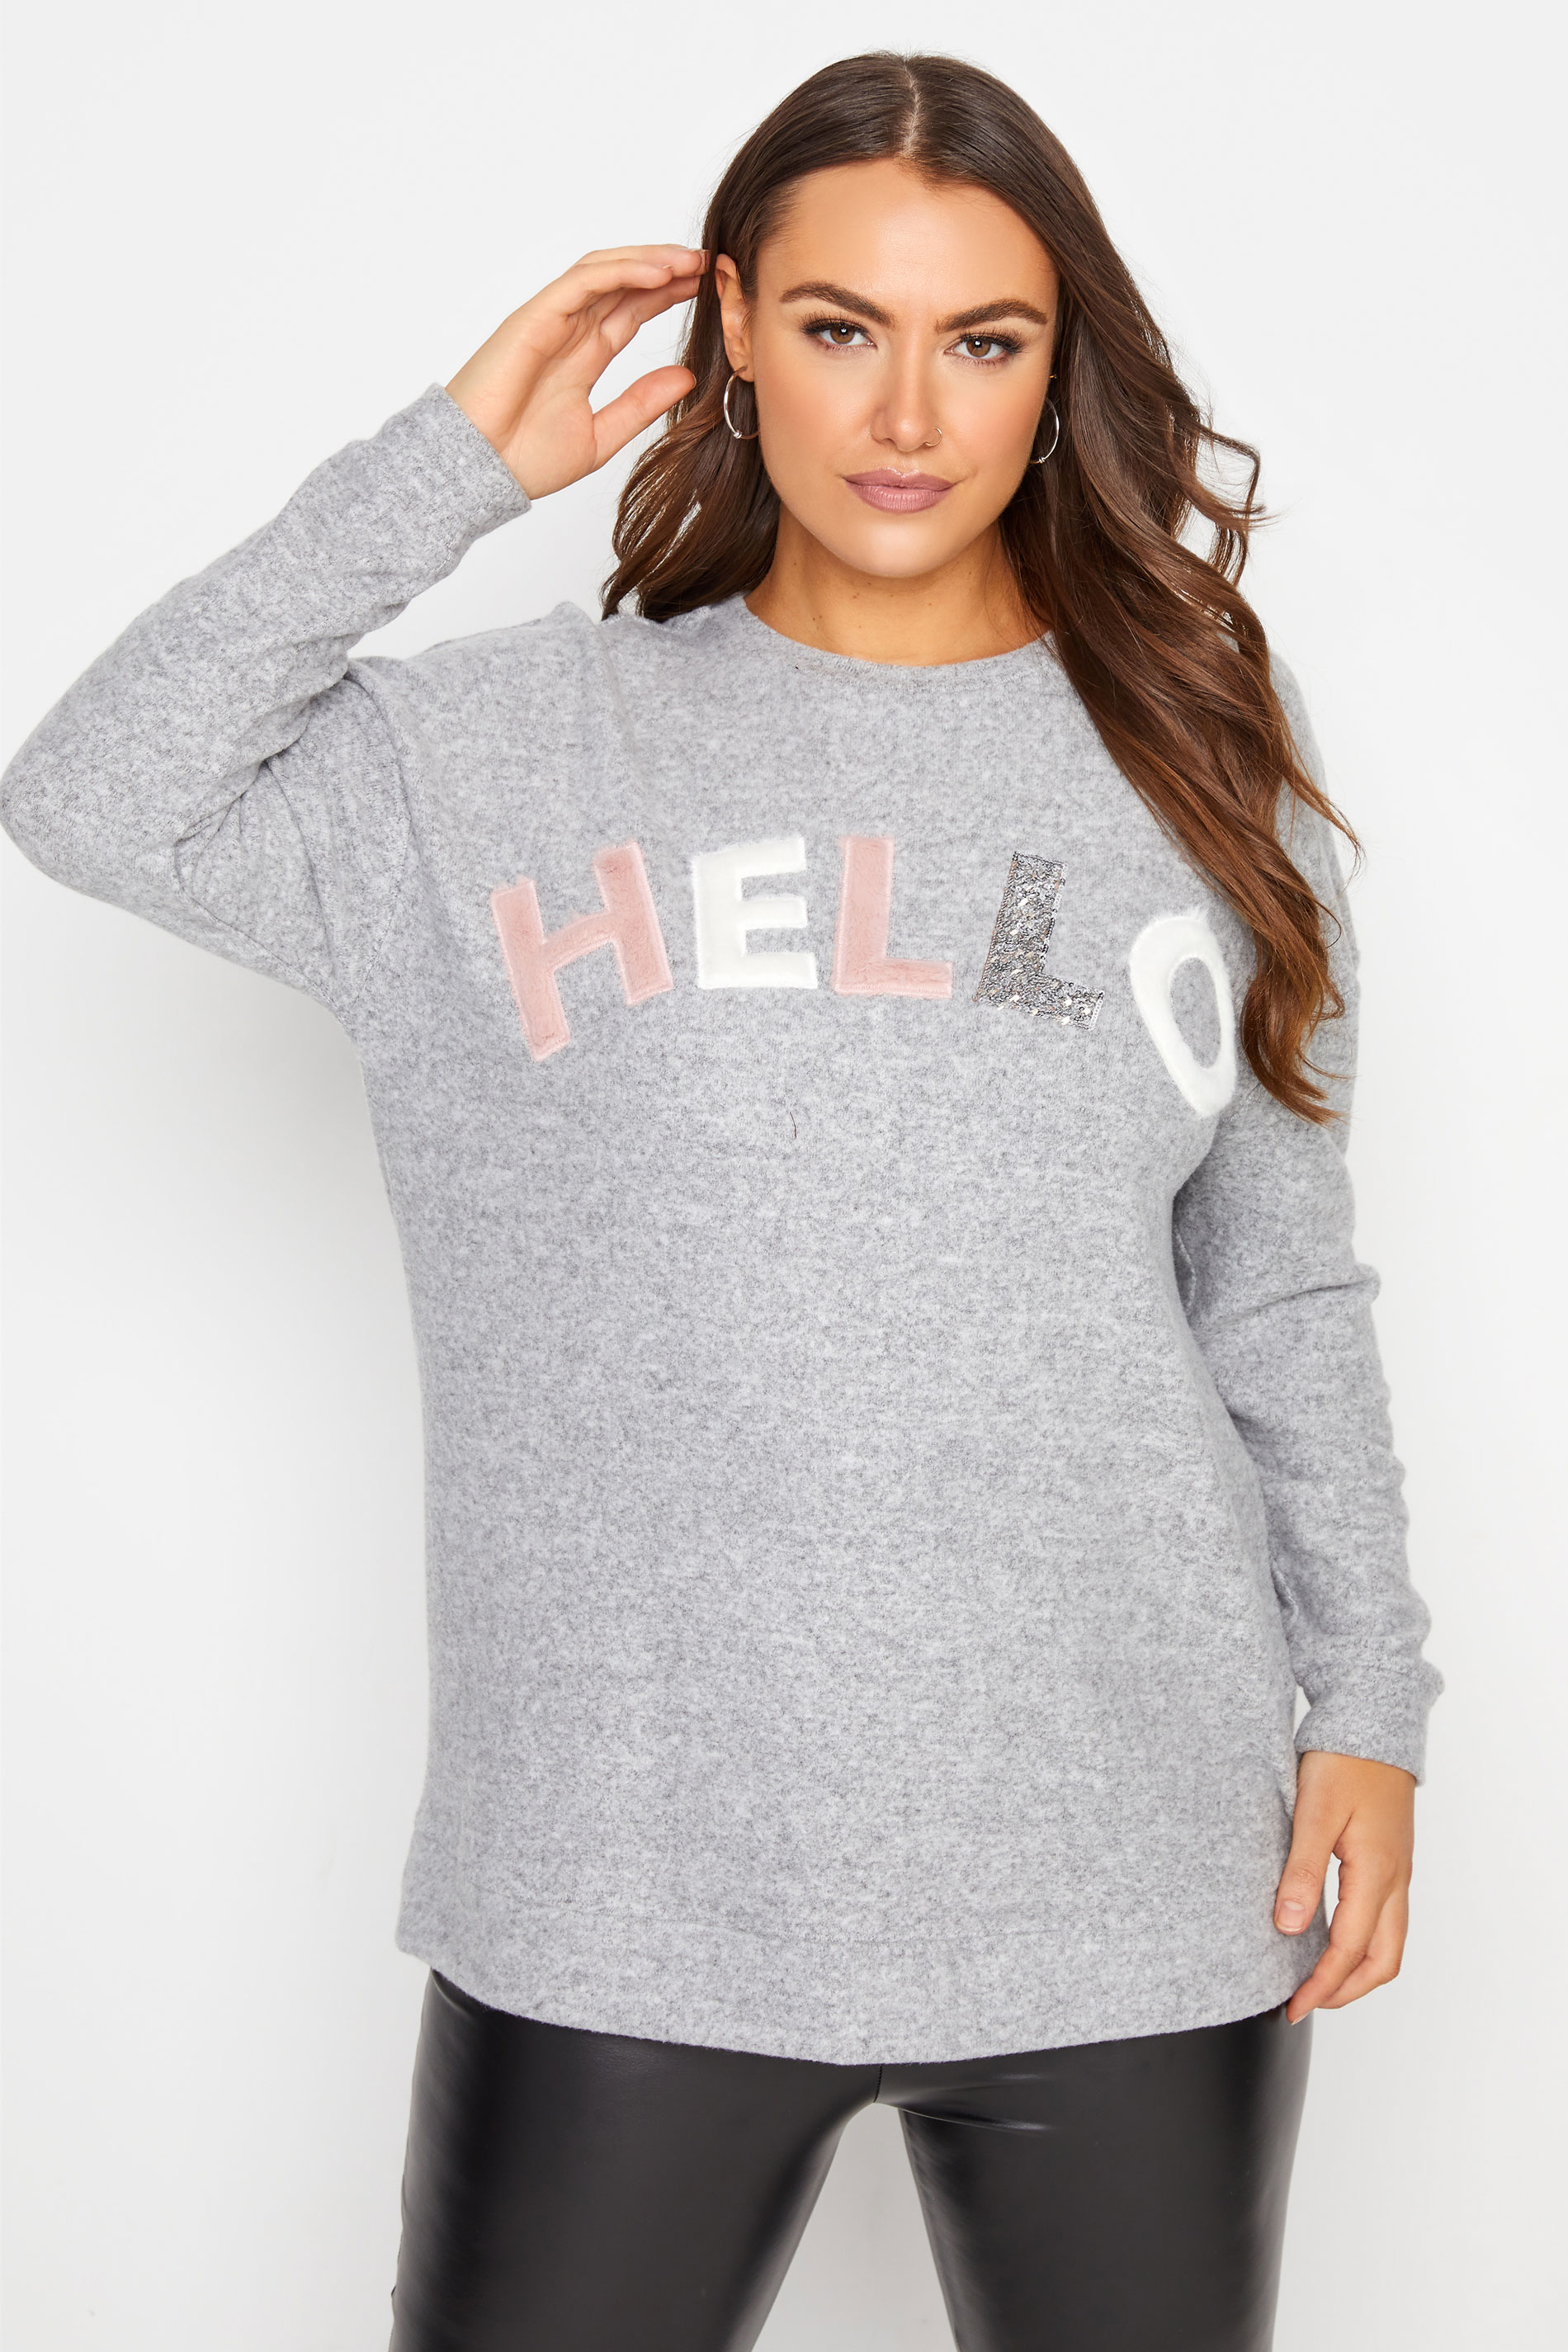 Grey Embellished 'Hello' Slogan Knitted Jumper_A.jpg